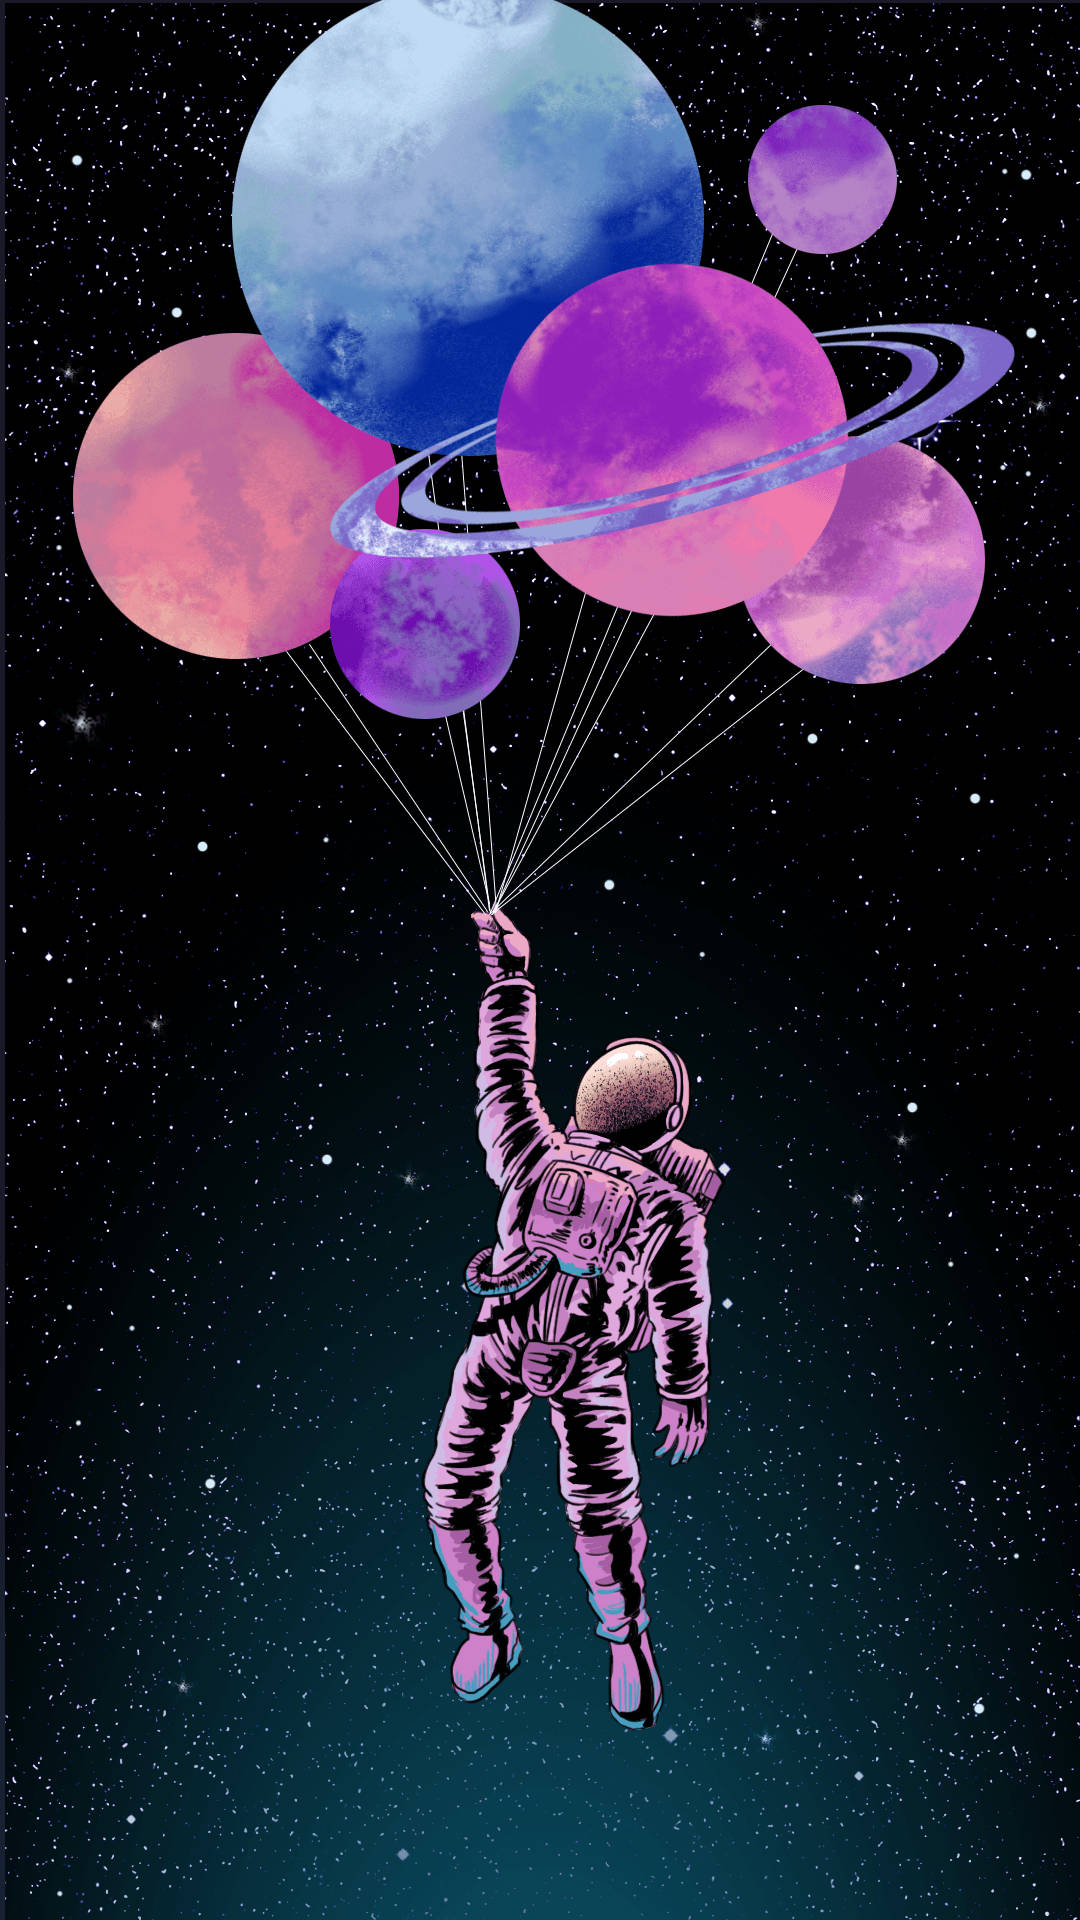 Astronaut Aesthetic Balloon Planets